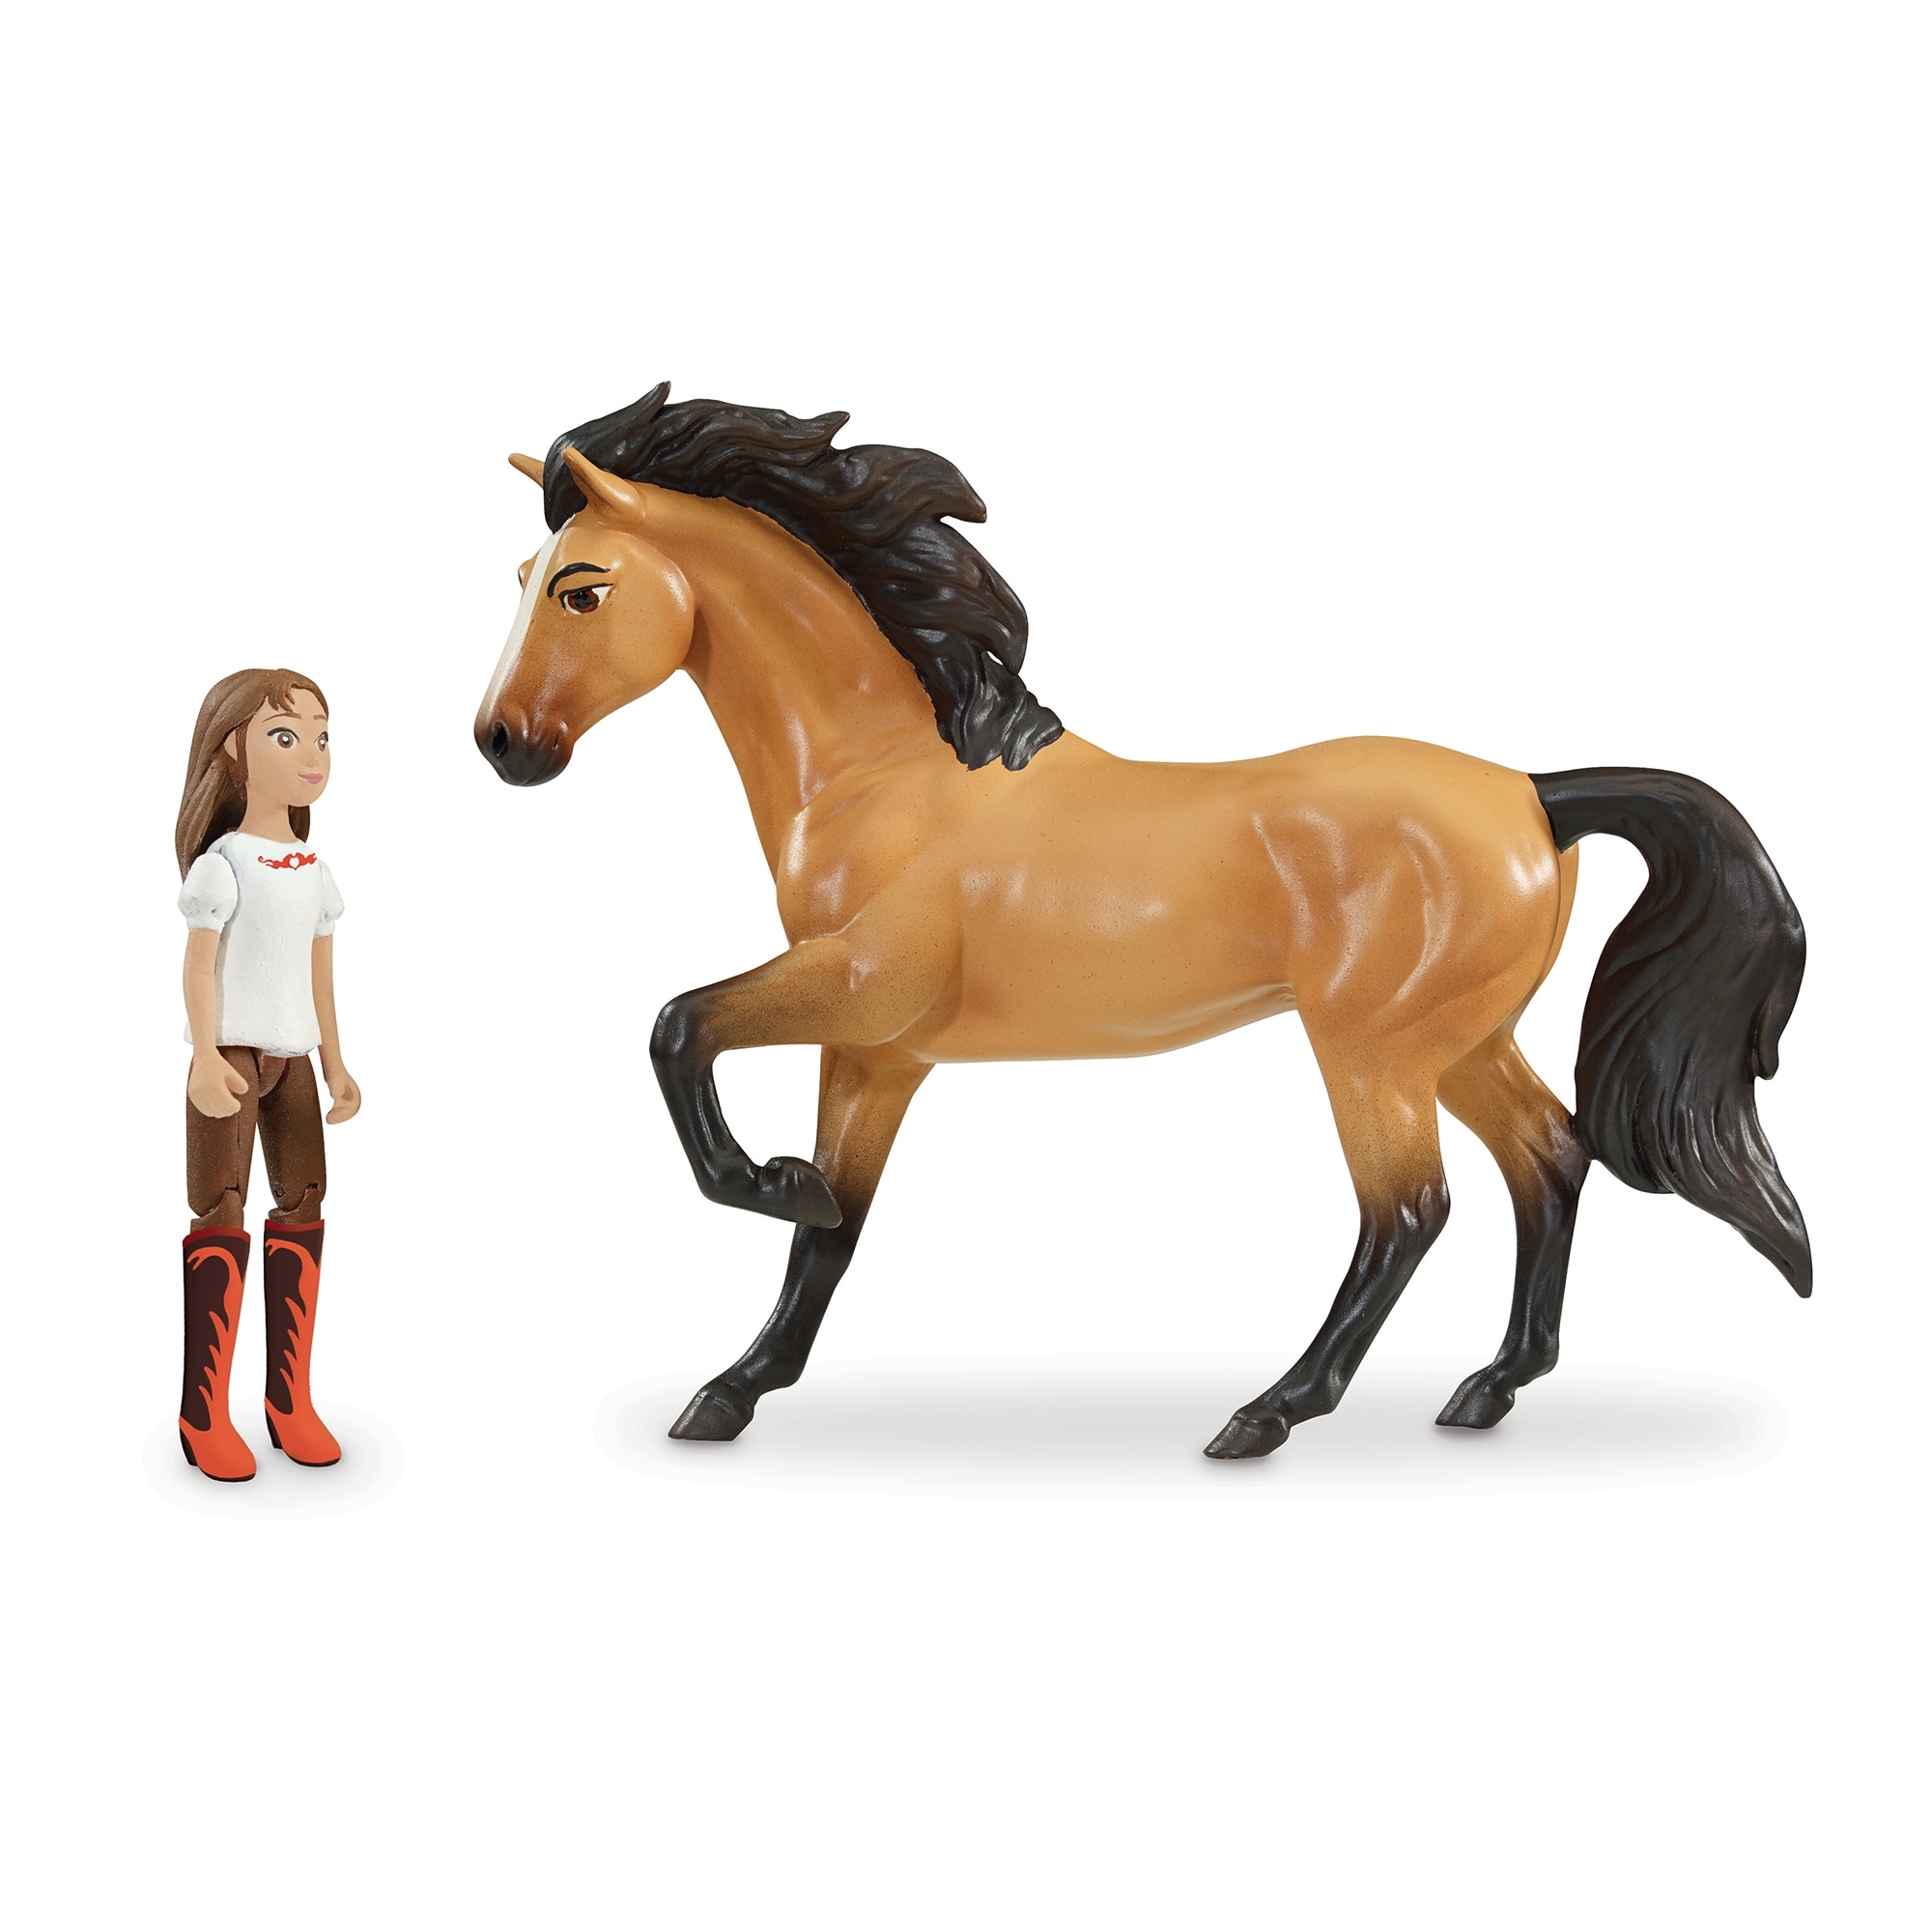 spirit horse and doll set